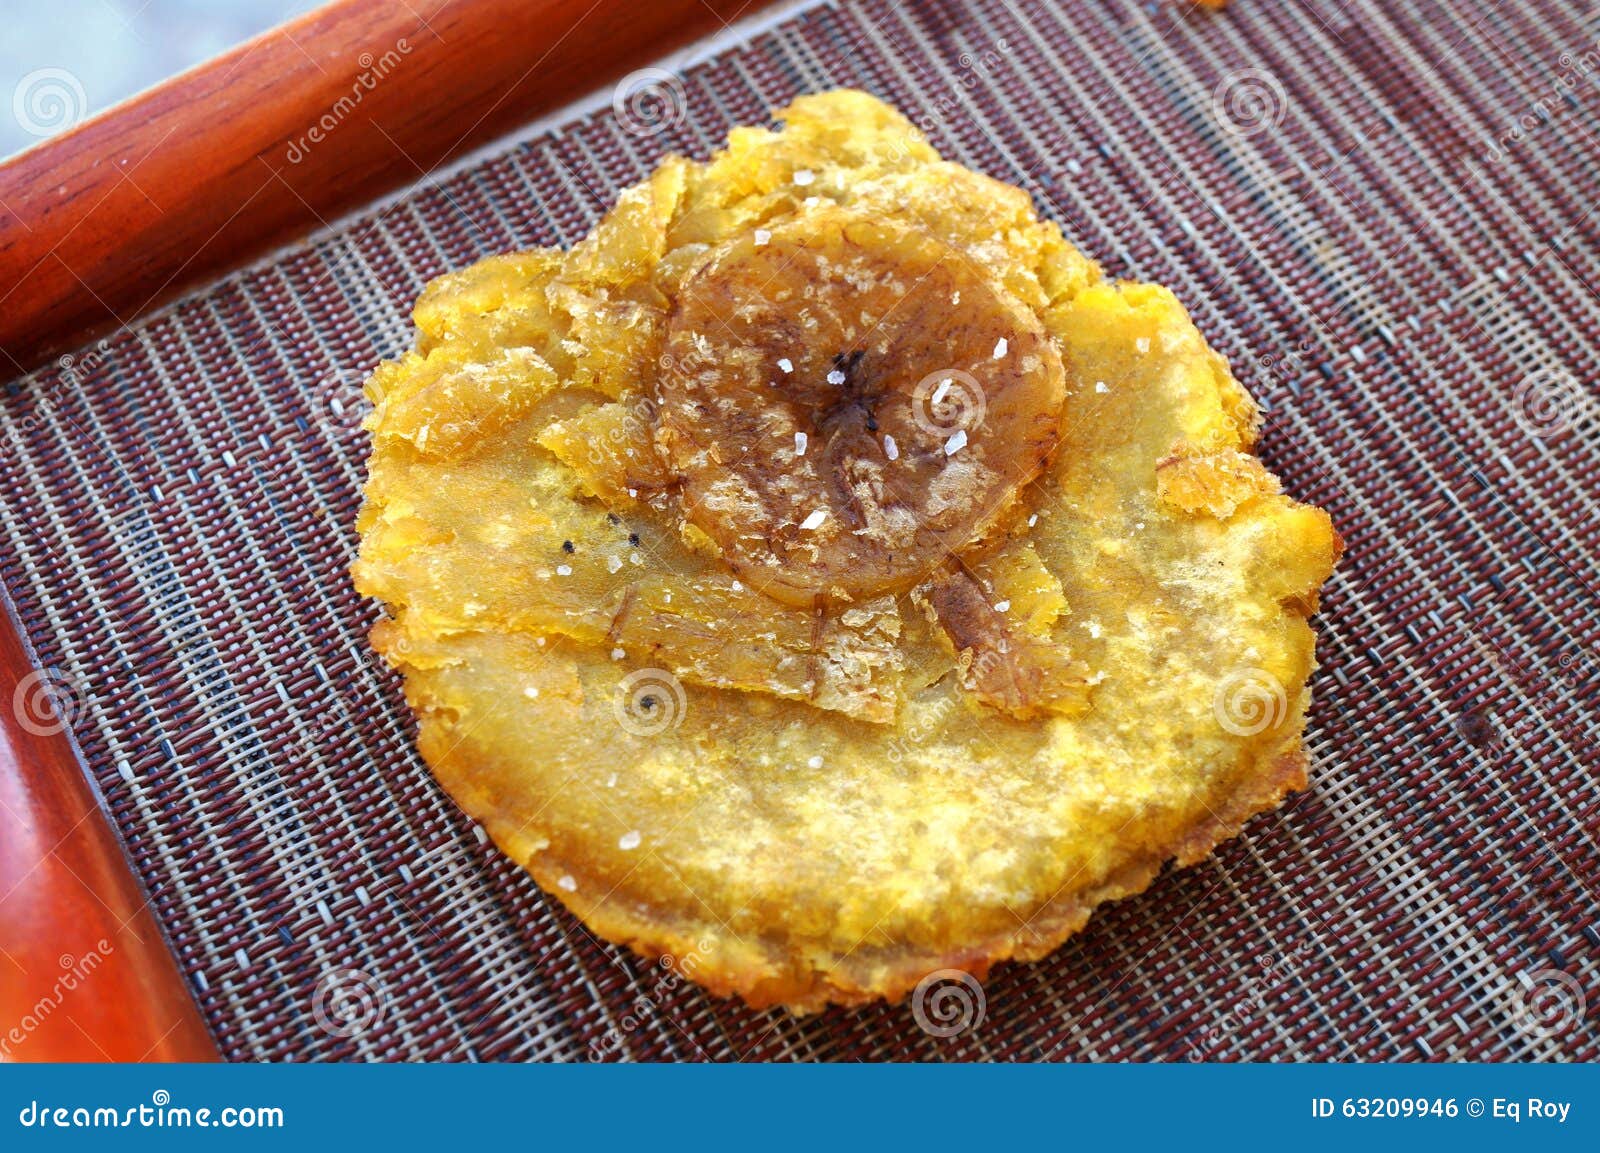 fried plantain tostones (patacones)